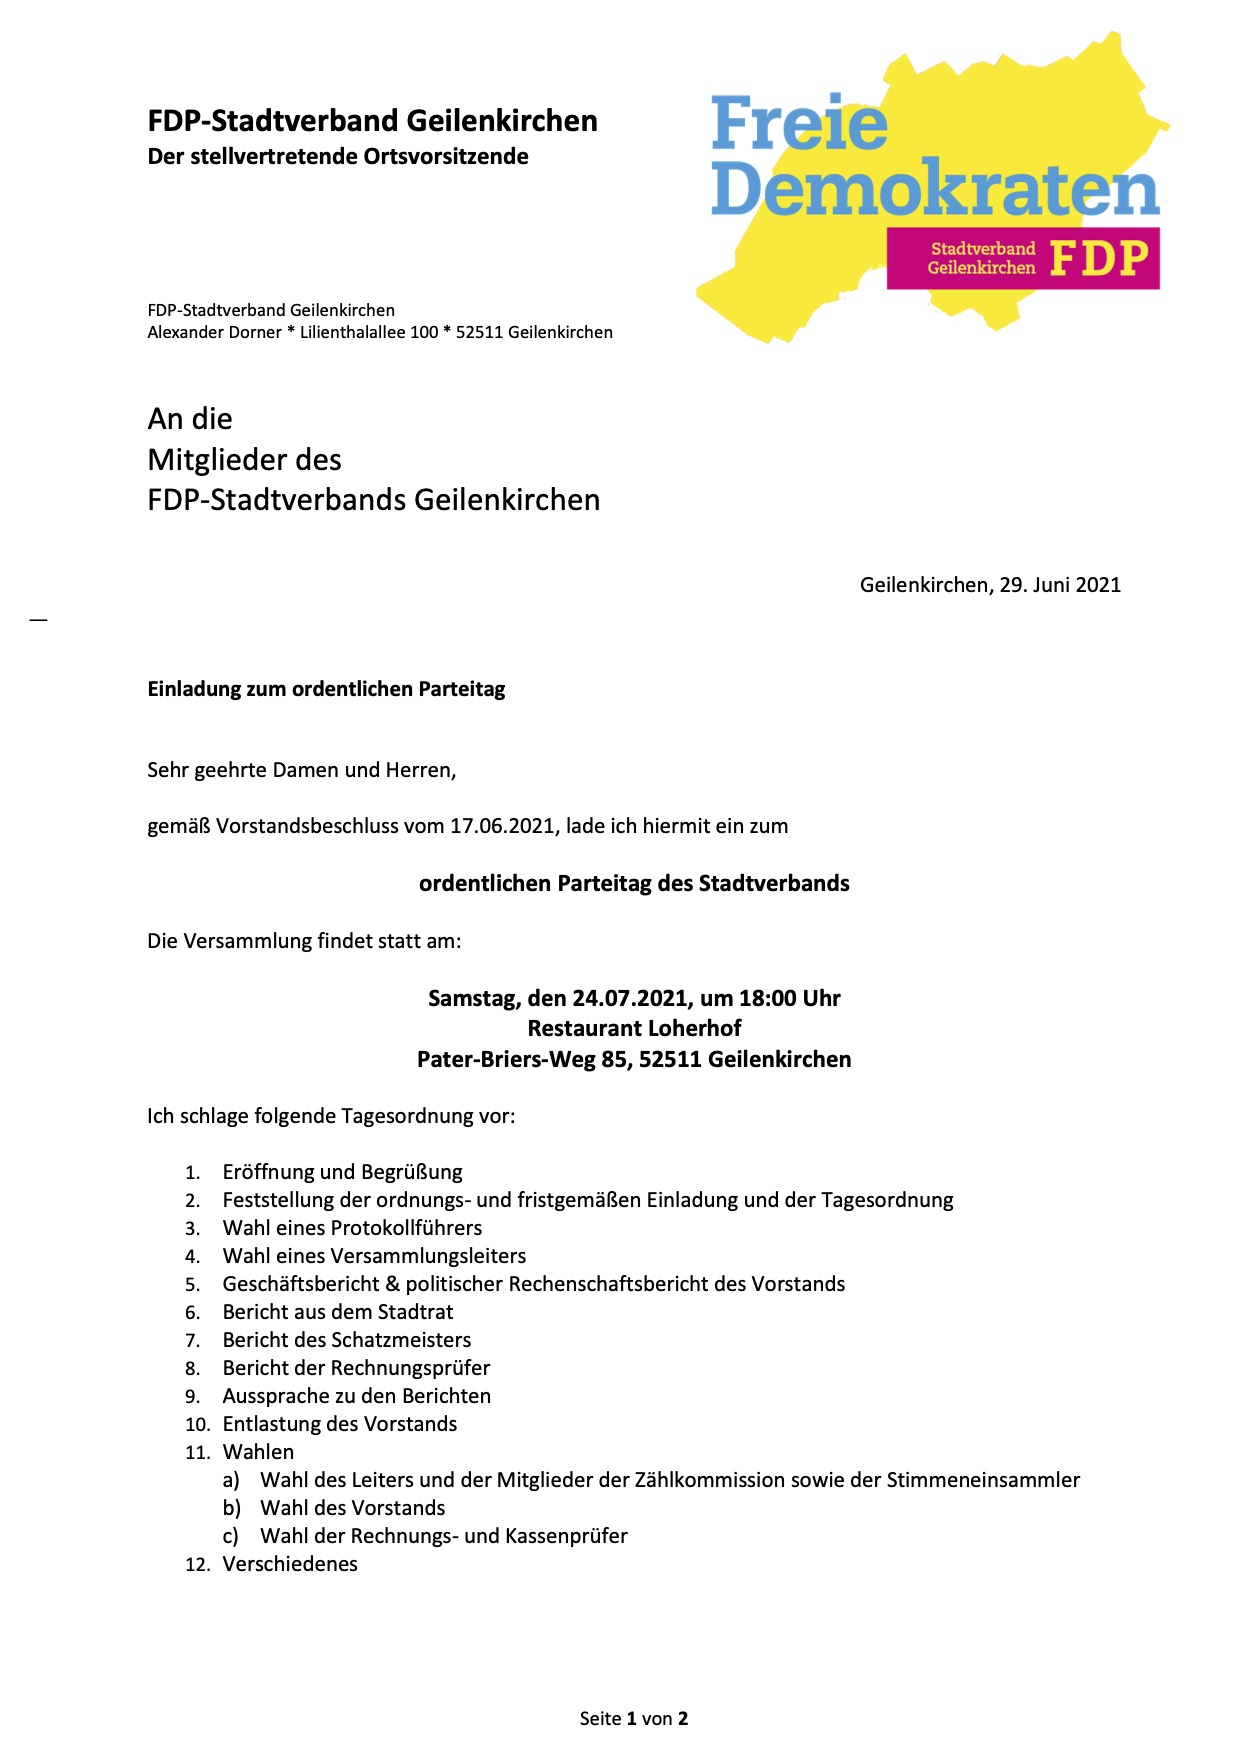 Einladung Parteitag FDP Stadtverband